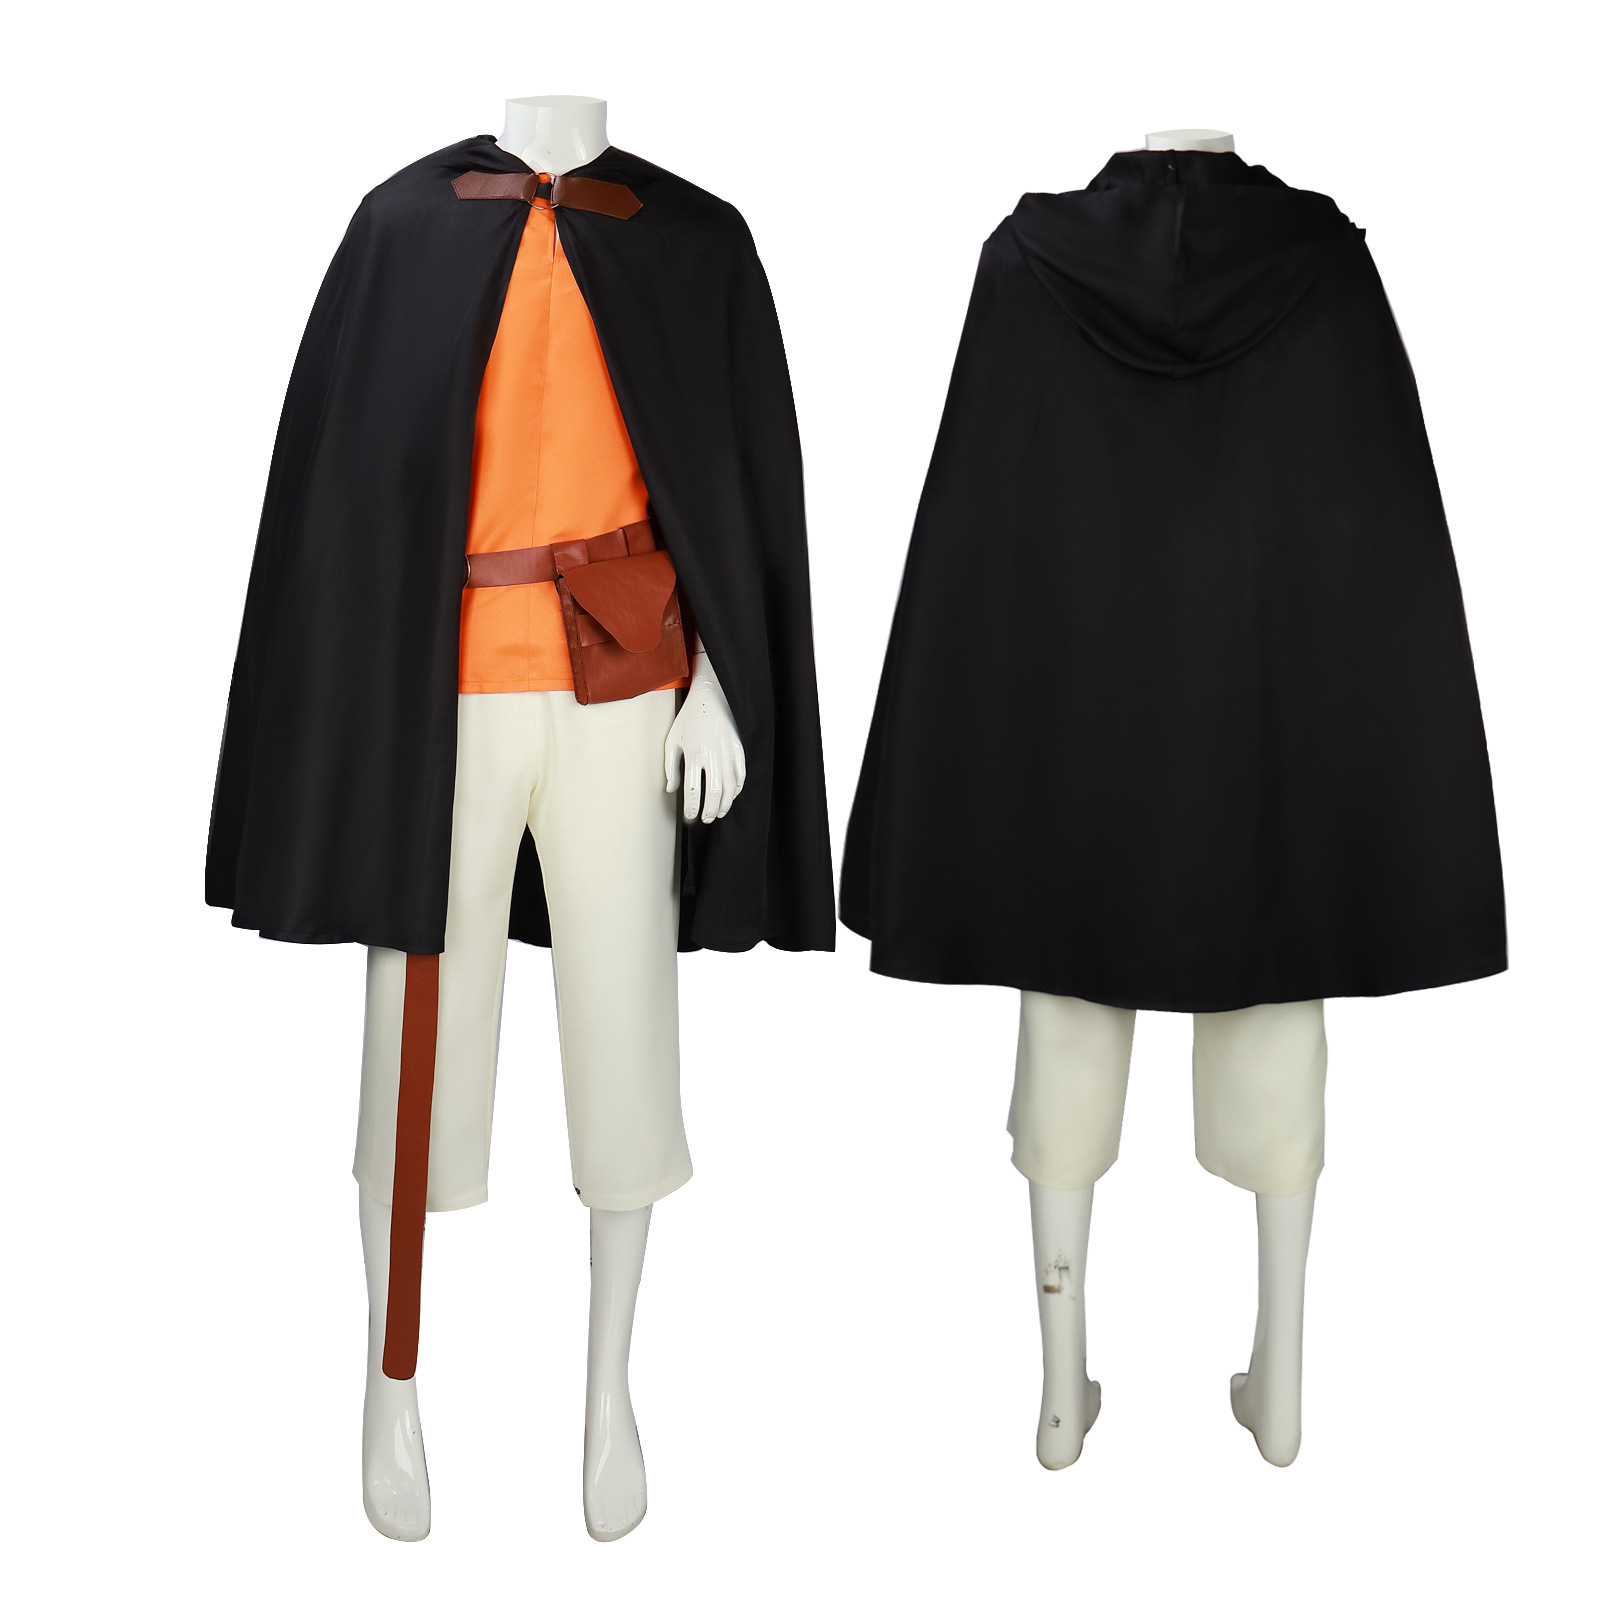 Halloween men's hooded cloak medieval pirate robe old ranger costume cosplay costume